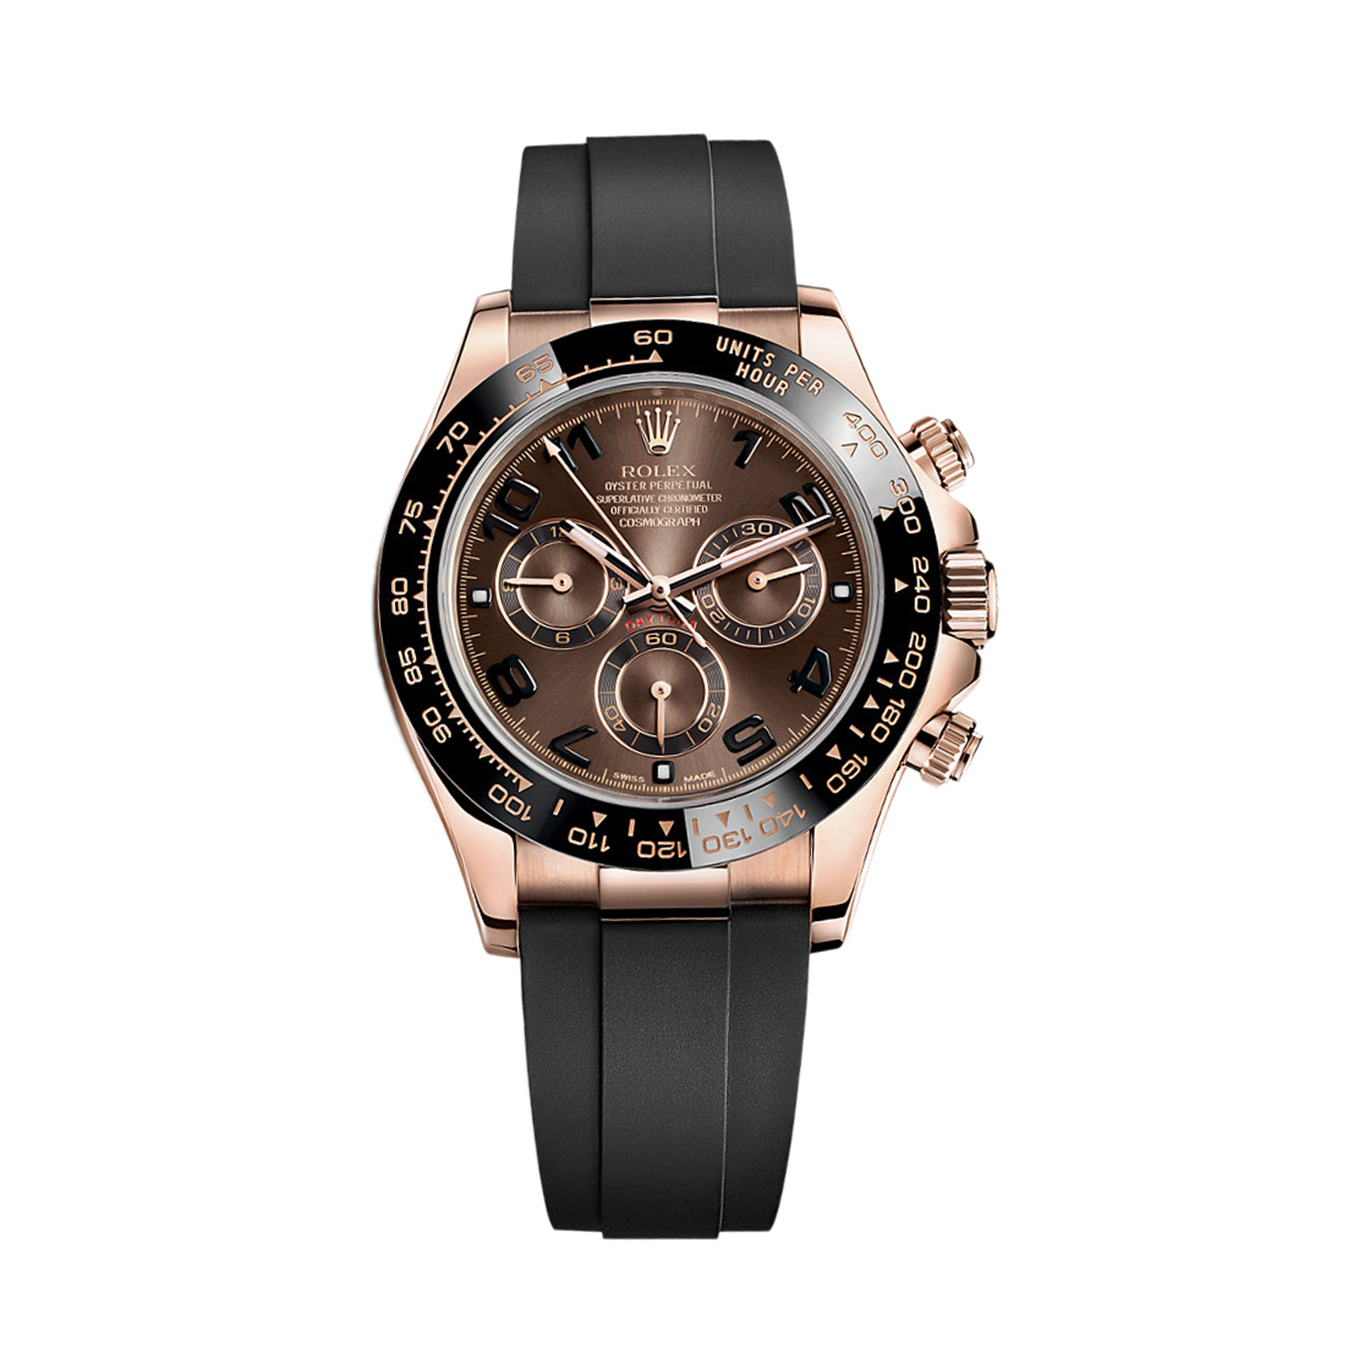 Cosmograph Daytona 116515LN Rose Gold Watch (Chocolate)